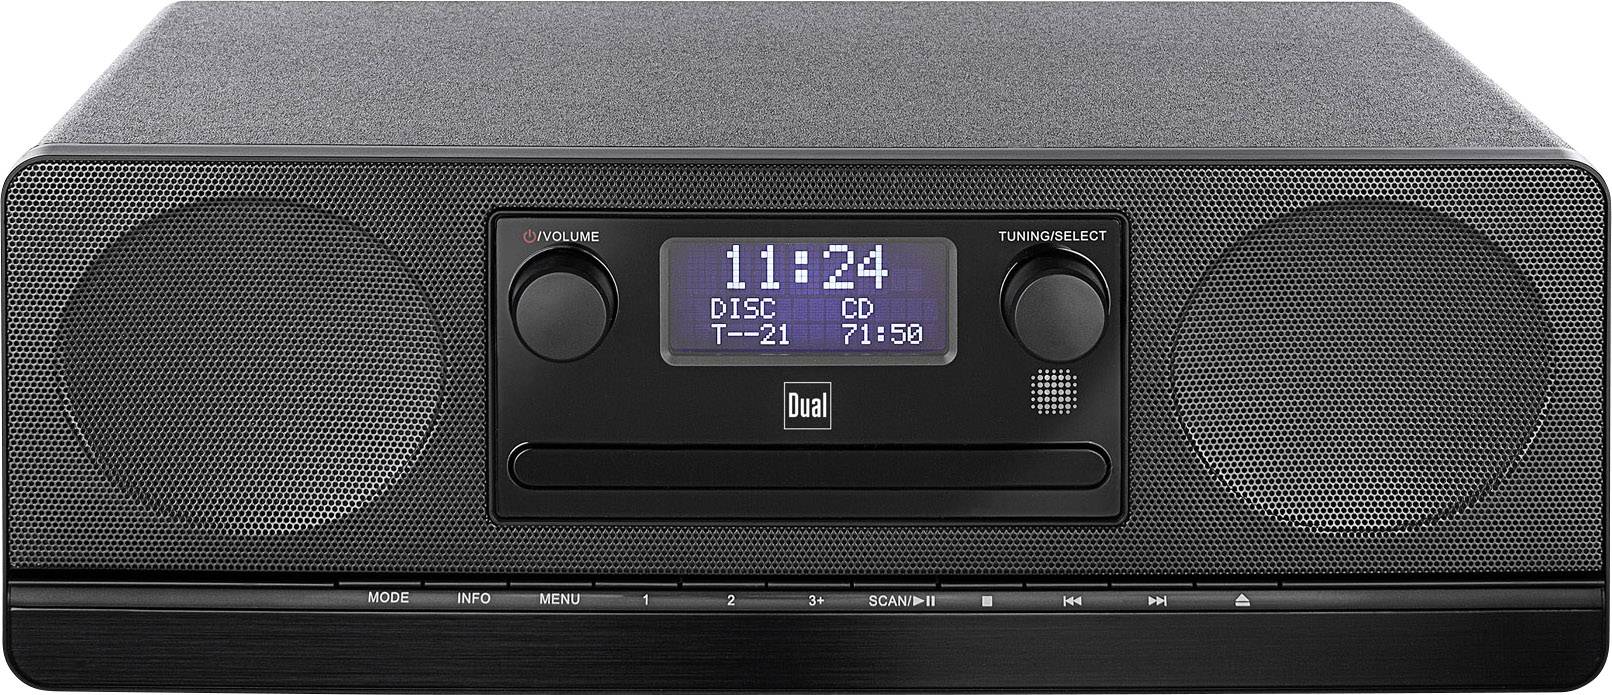 Overgave boerderij Misbruik Dual DAB 420 BT Radio CD player DAB+, FM AUX, Bluetooth, CD Black |  Conrad.com